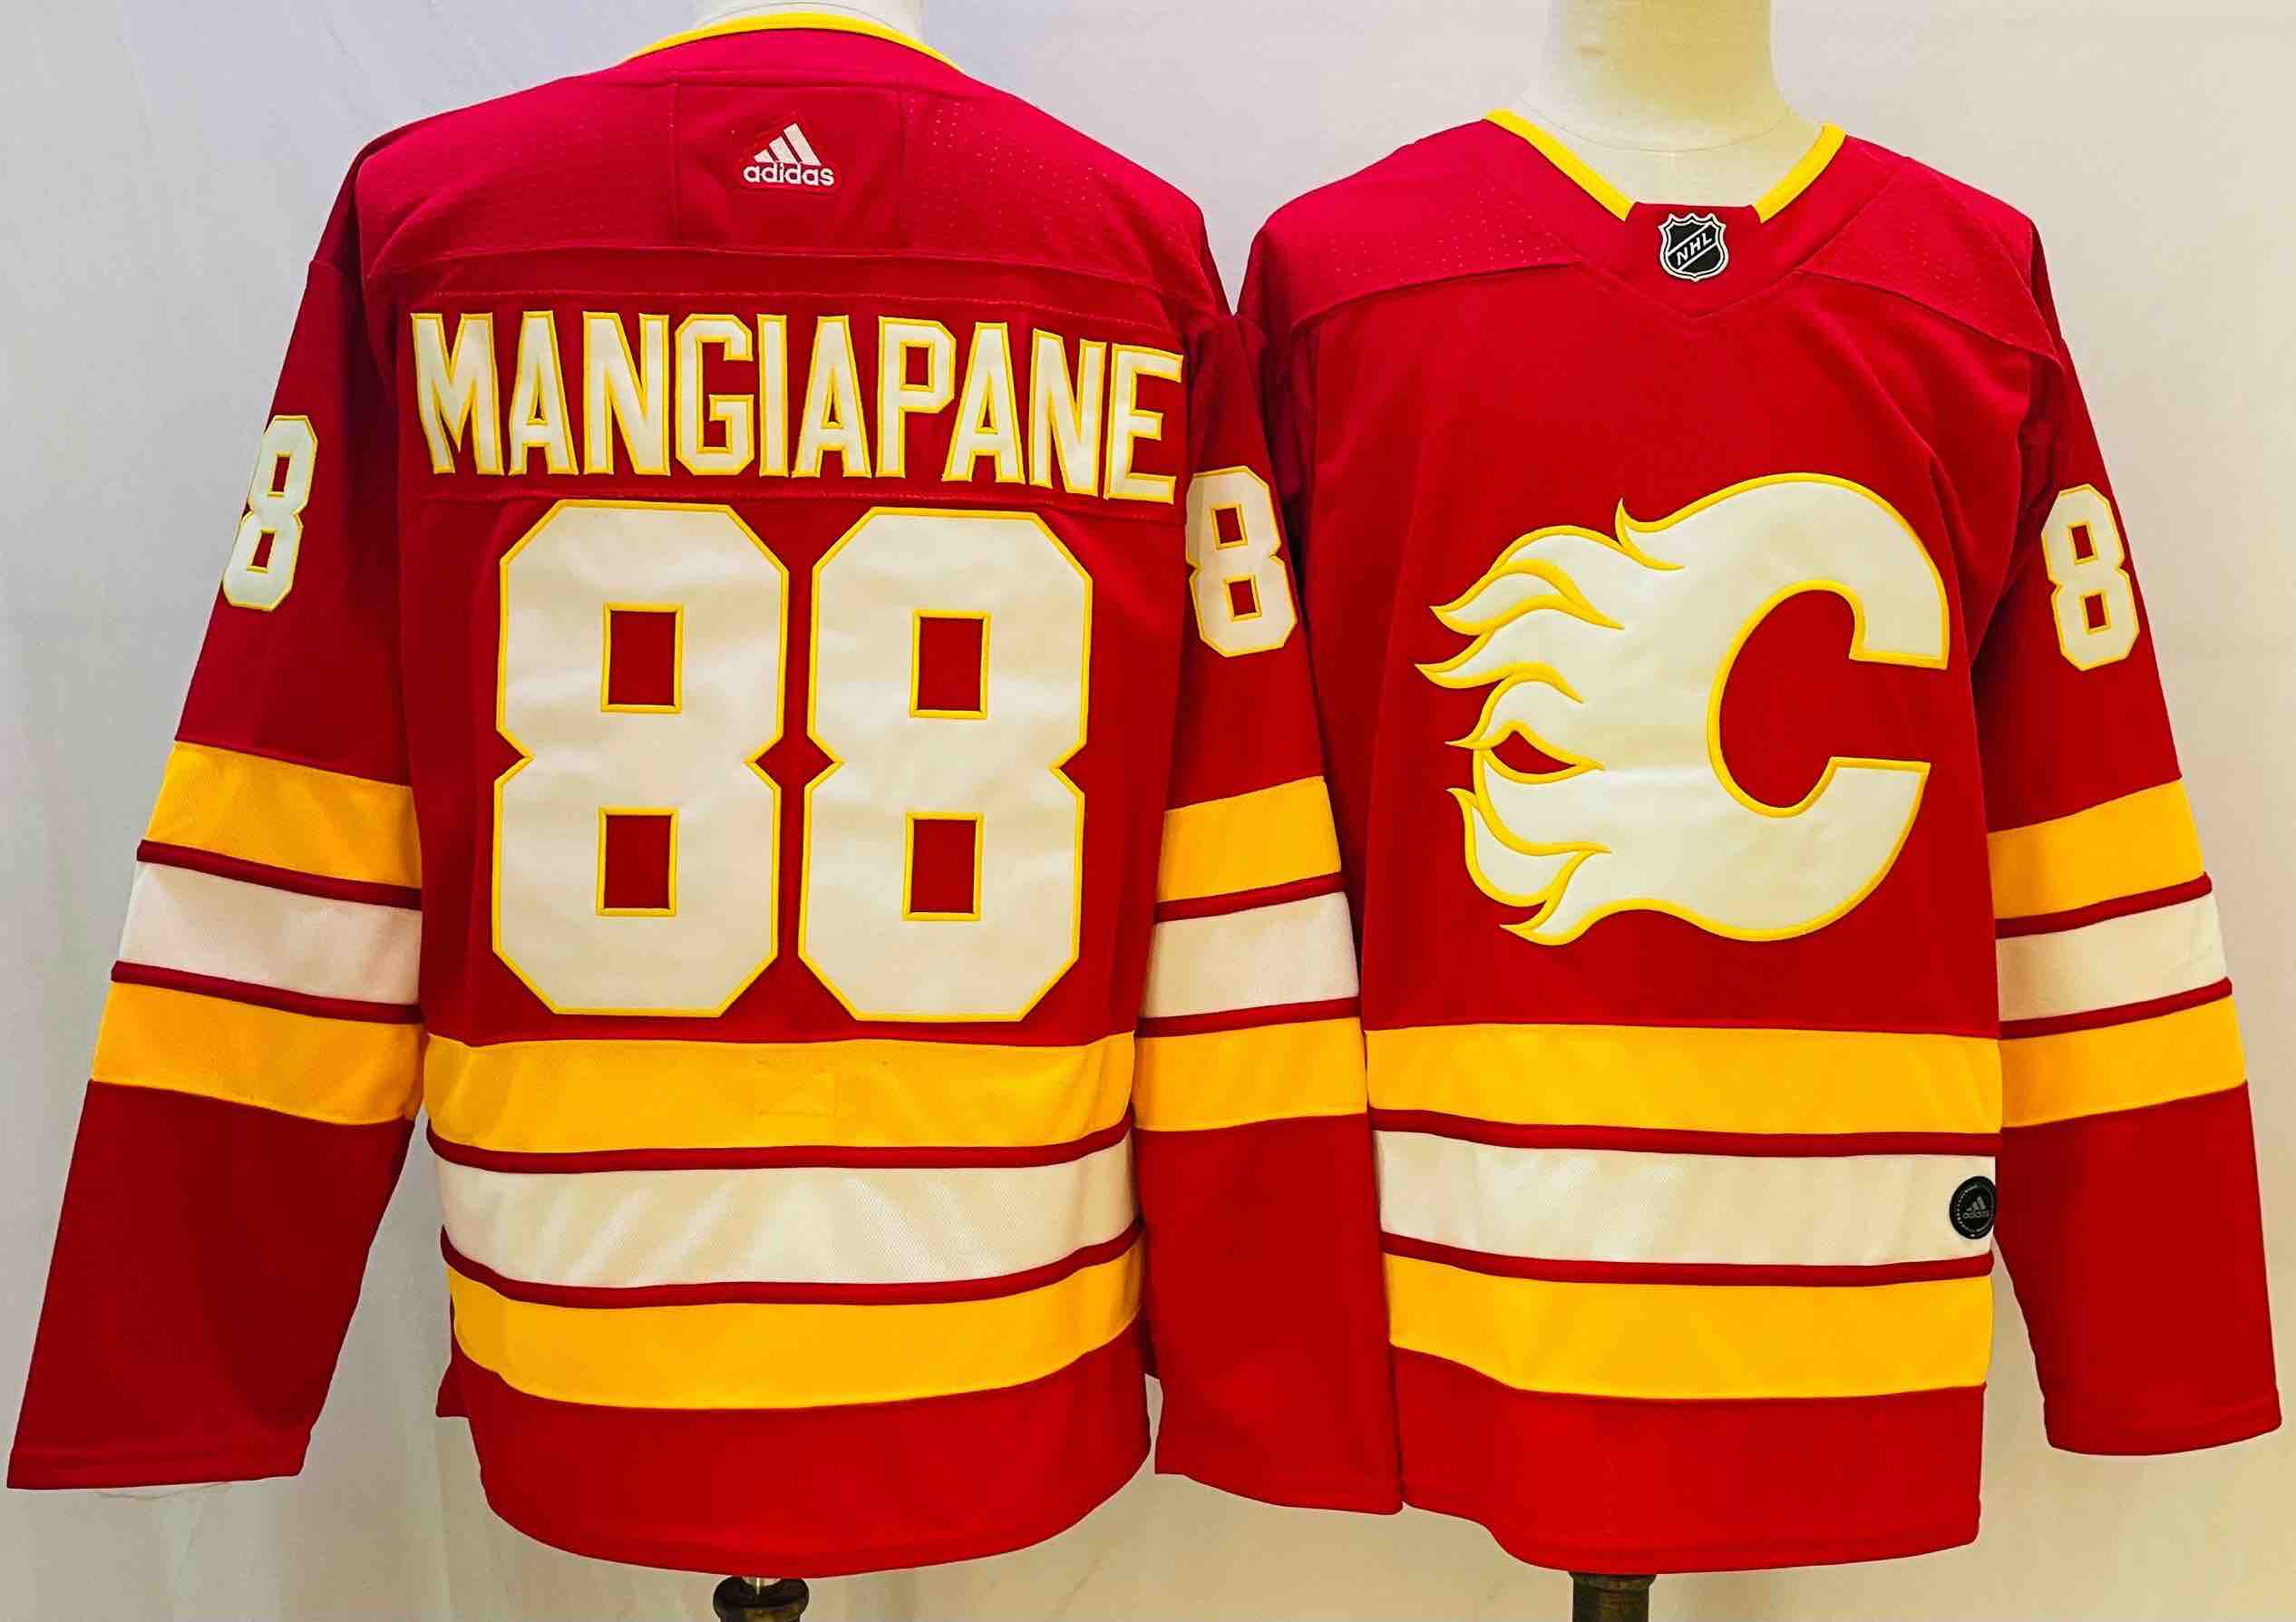 Adidas NHL Calgary Flames #88 Mangiapane Red Jersey